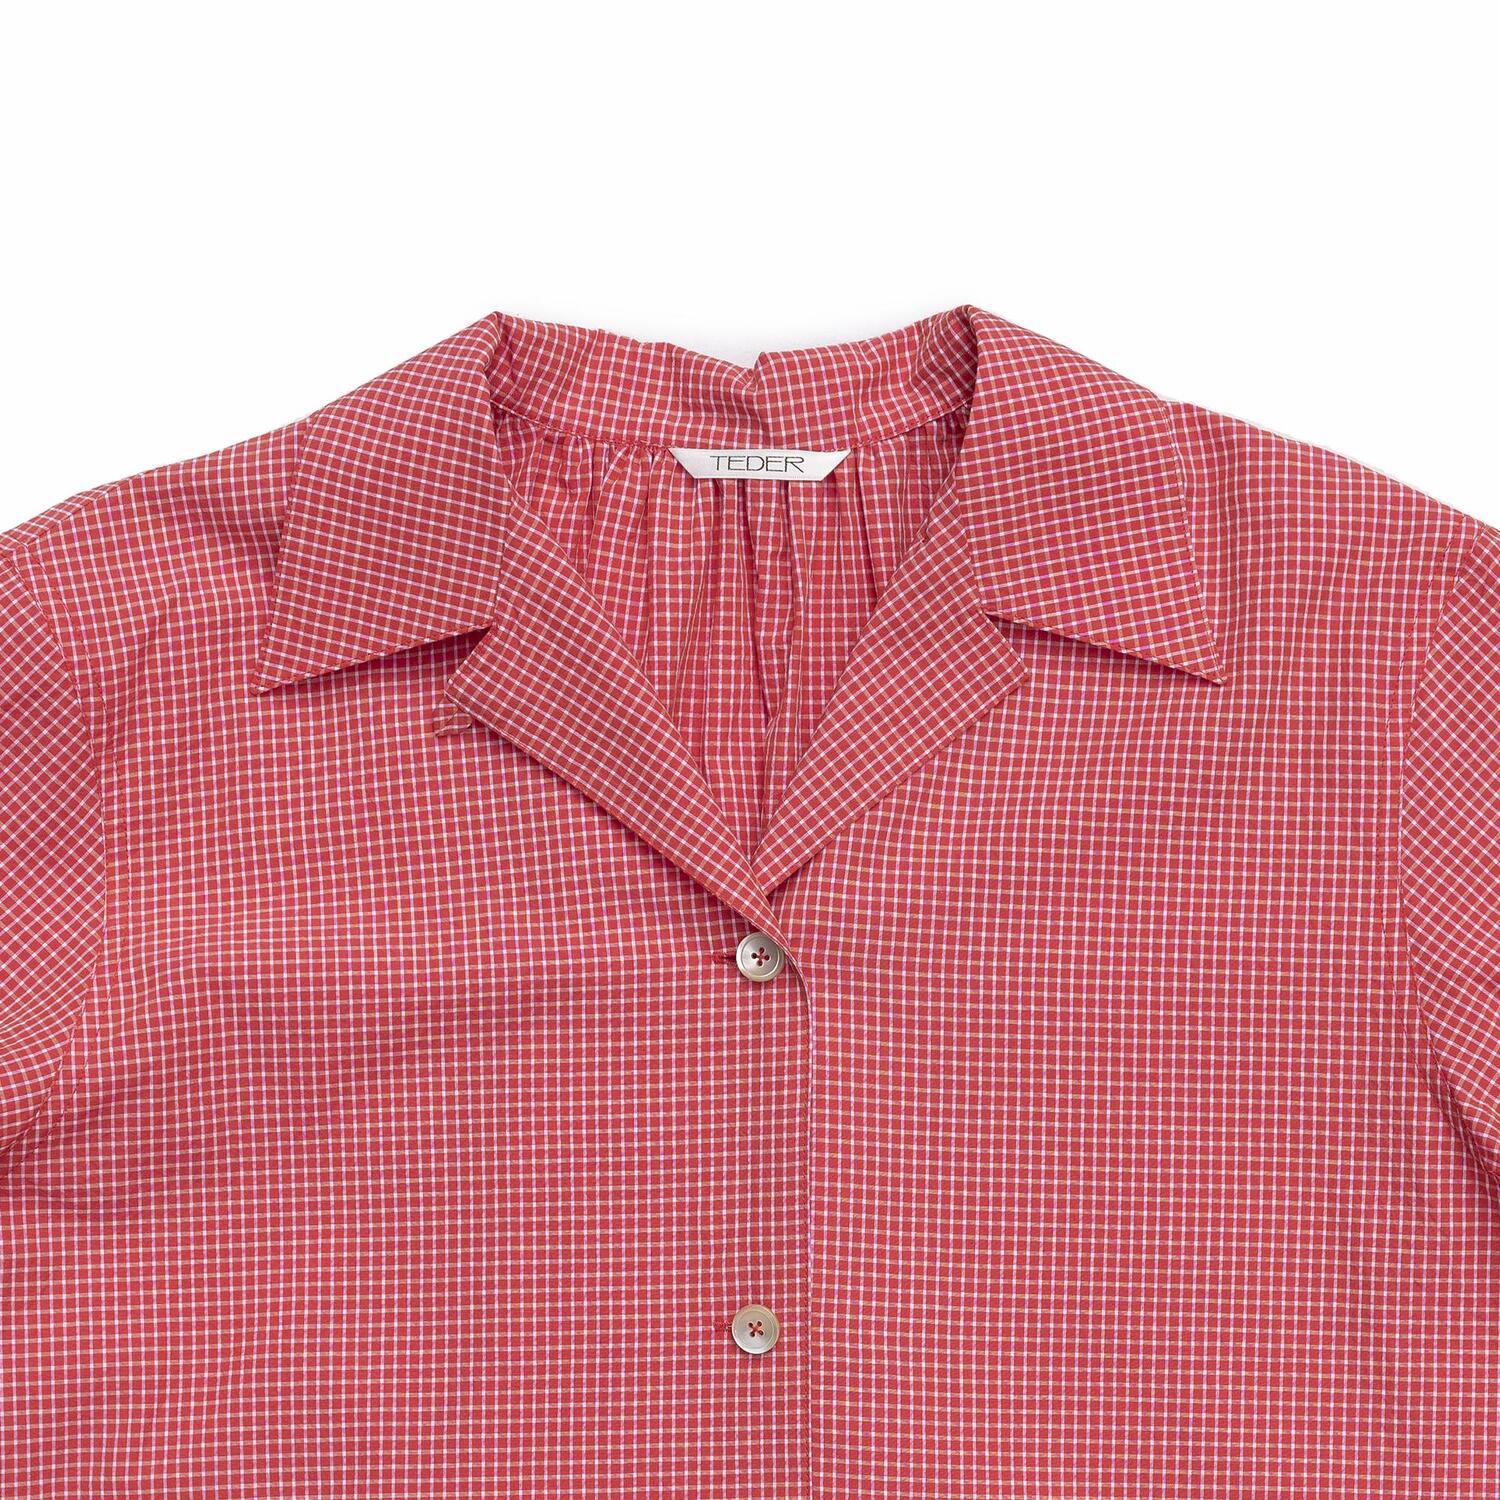 Campa Shirt - Red